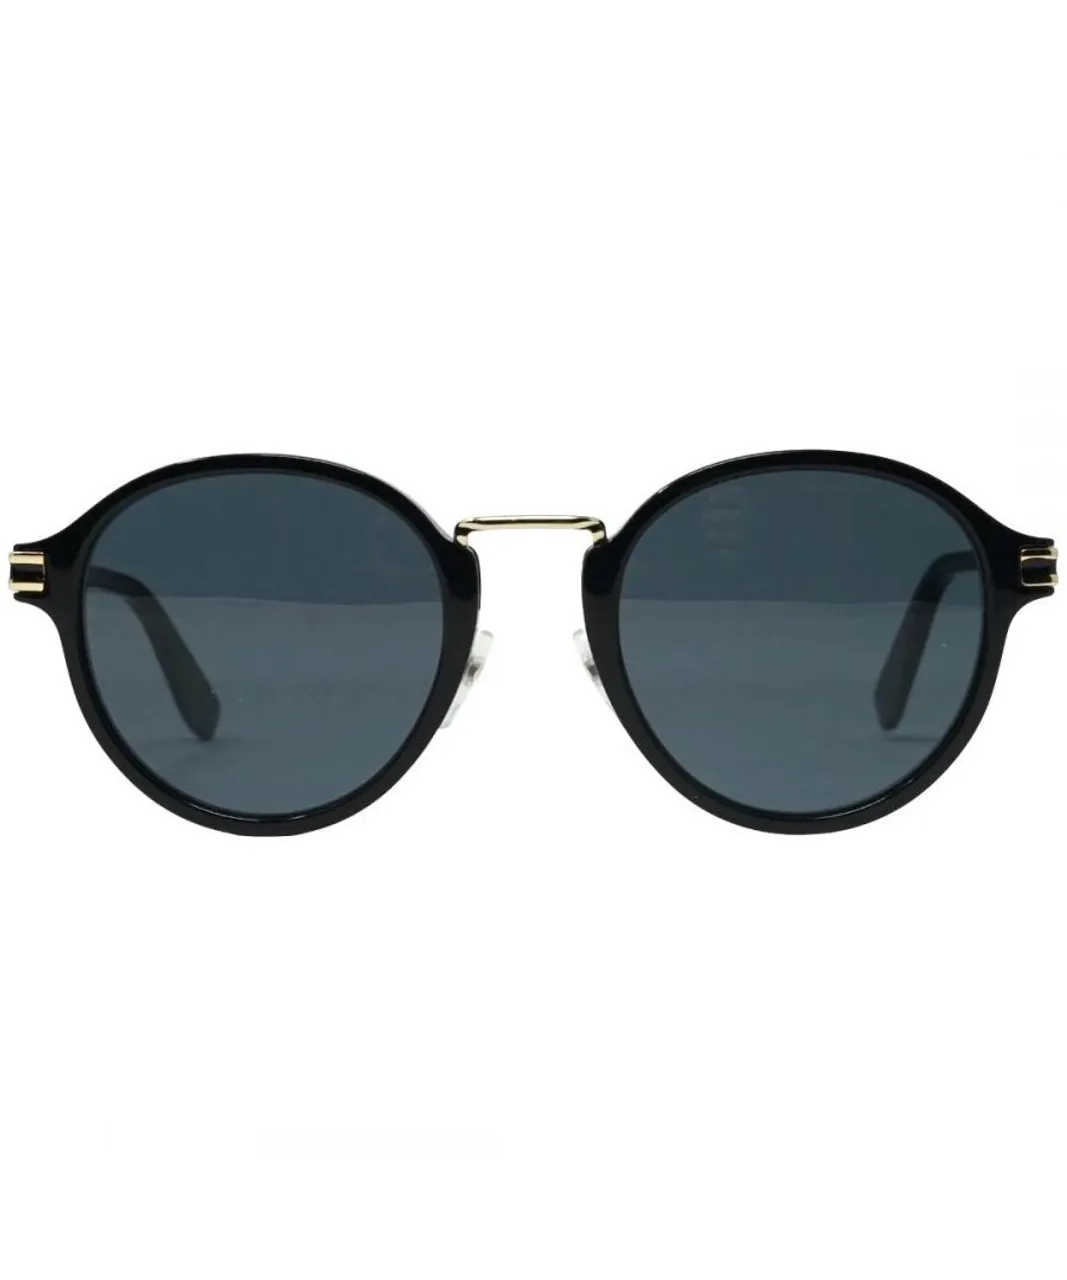 Marc Jacobs Mens 533 02M0 IR Black Sunglasses - One